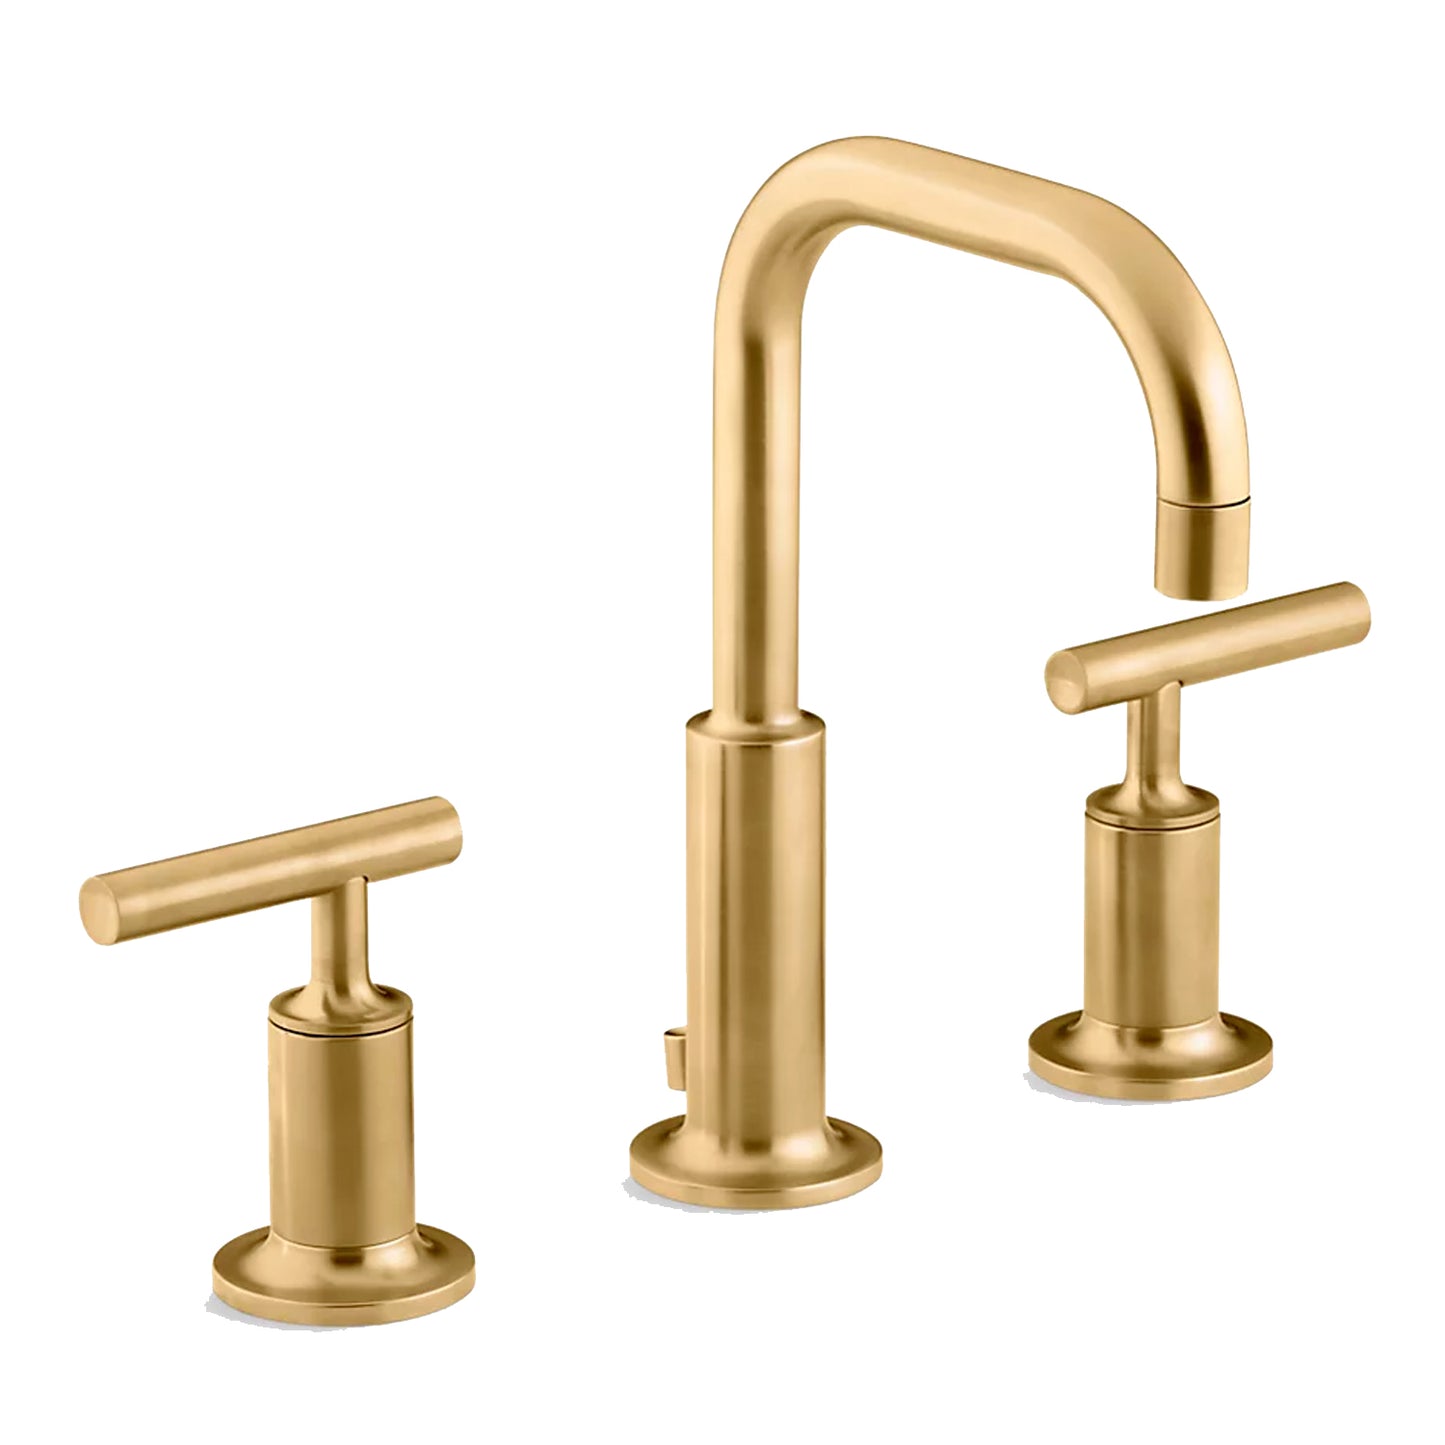 Kohler K-14406-4-2MB Purist Widespread Bathroom Faucet - Vibrant Brush Moderne Brass